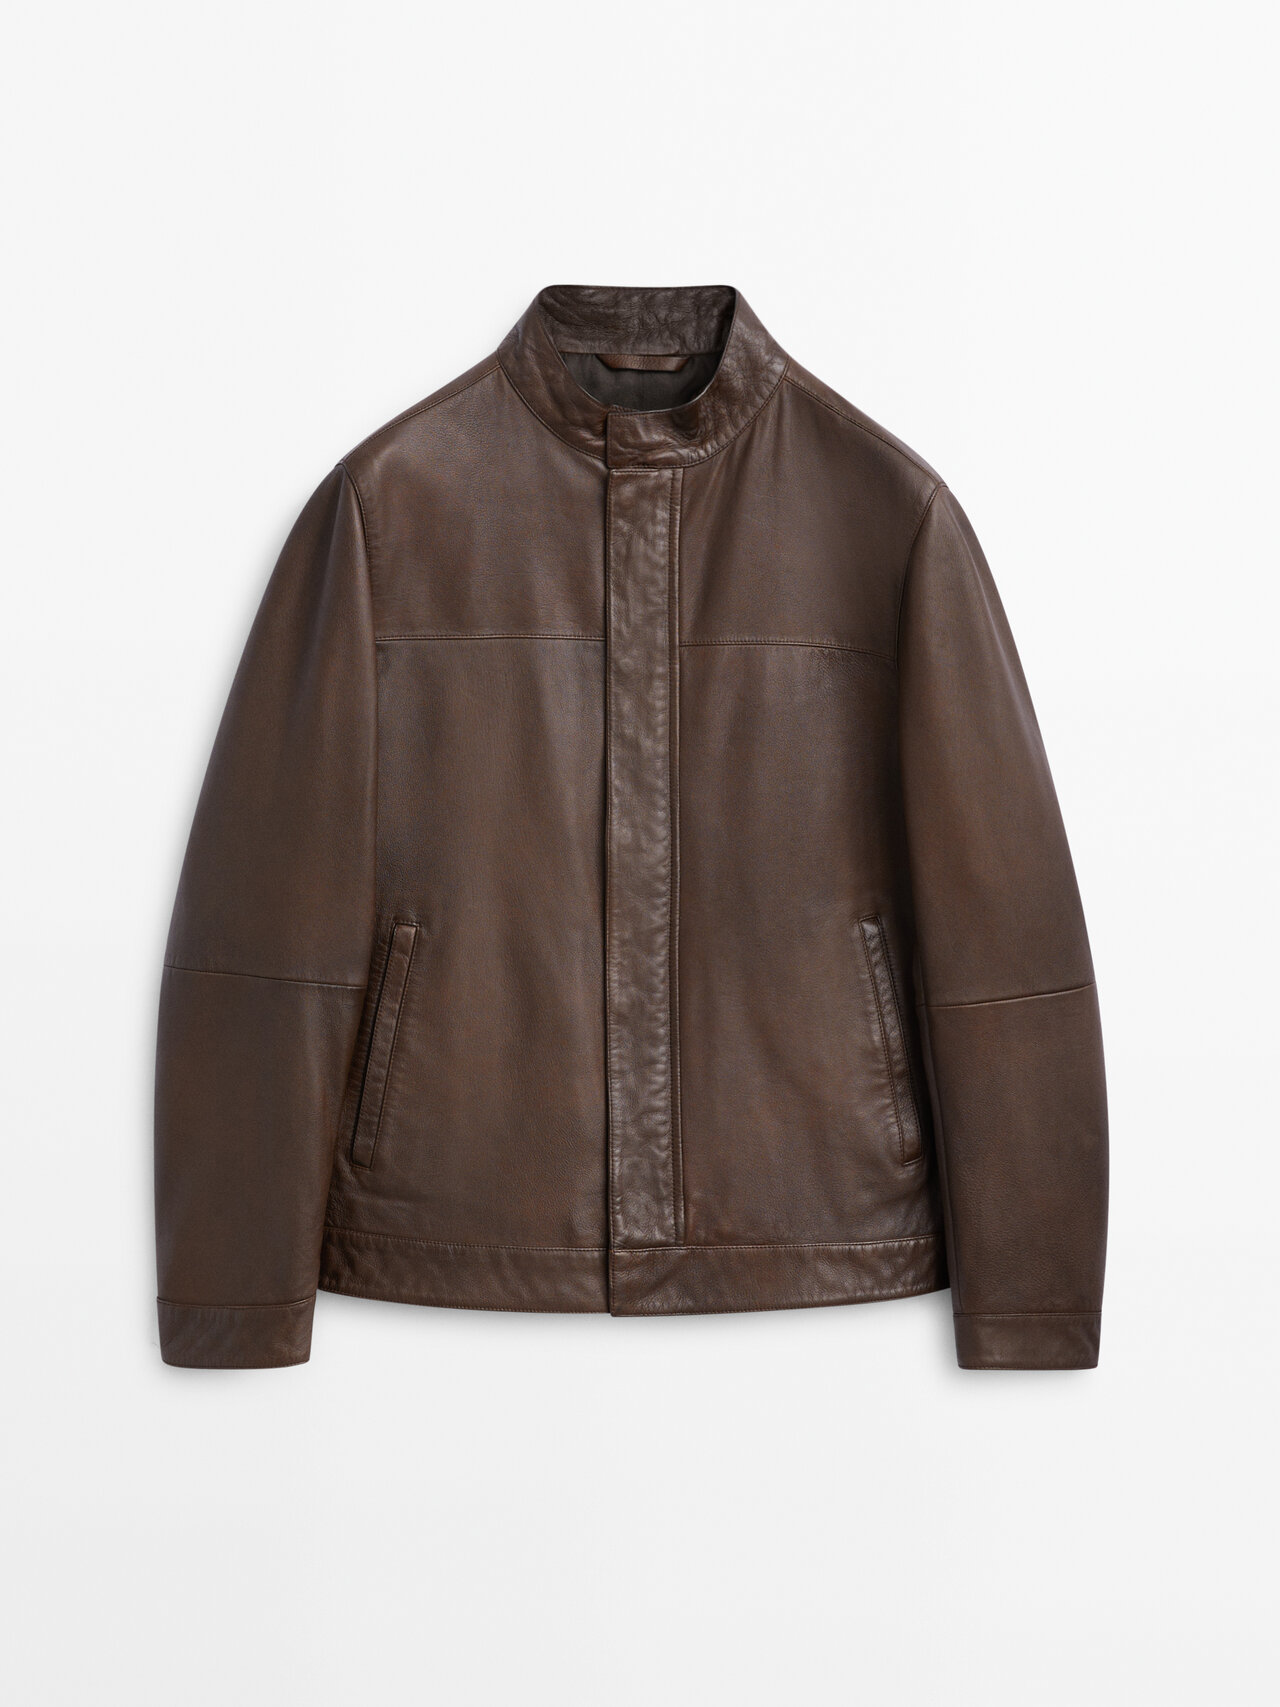 Massimo Dutti Brown Nappa Leather Jacket | ModeSens